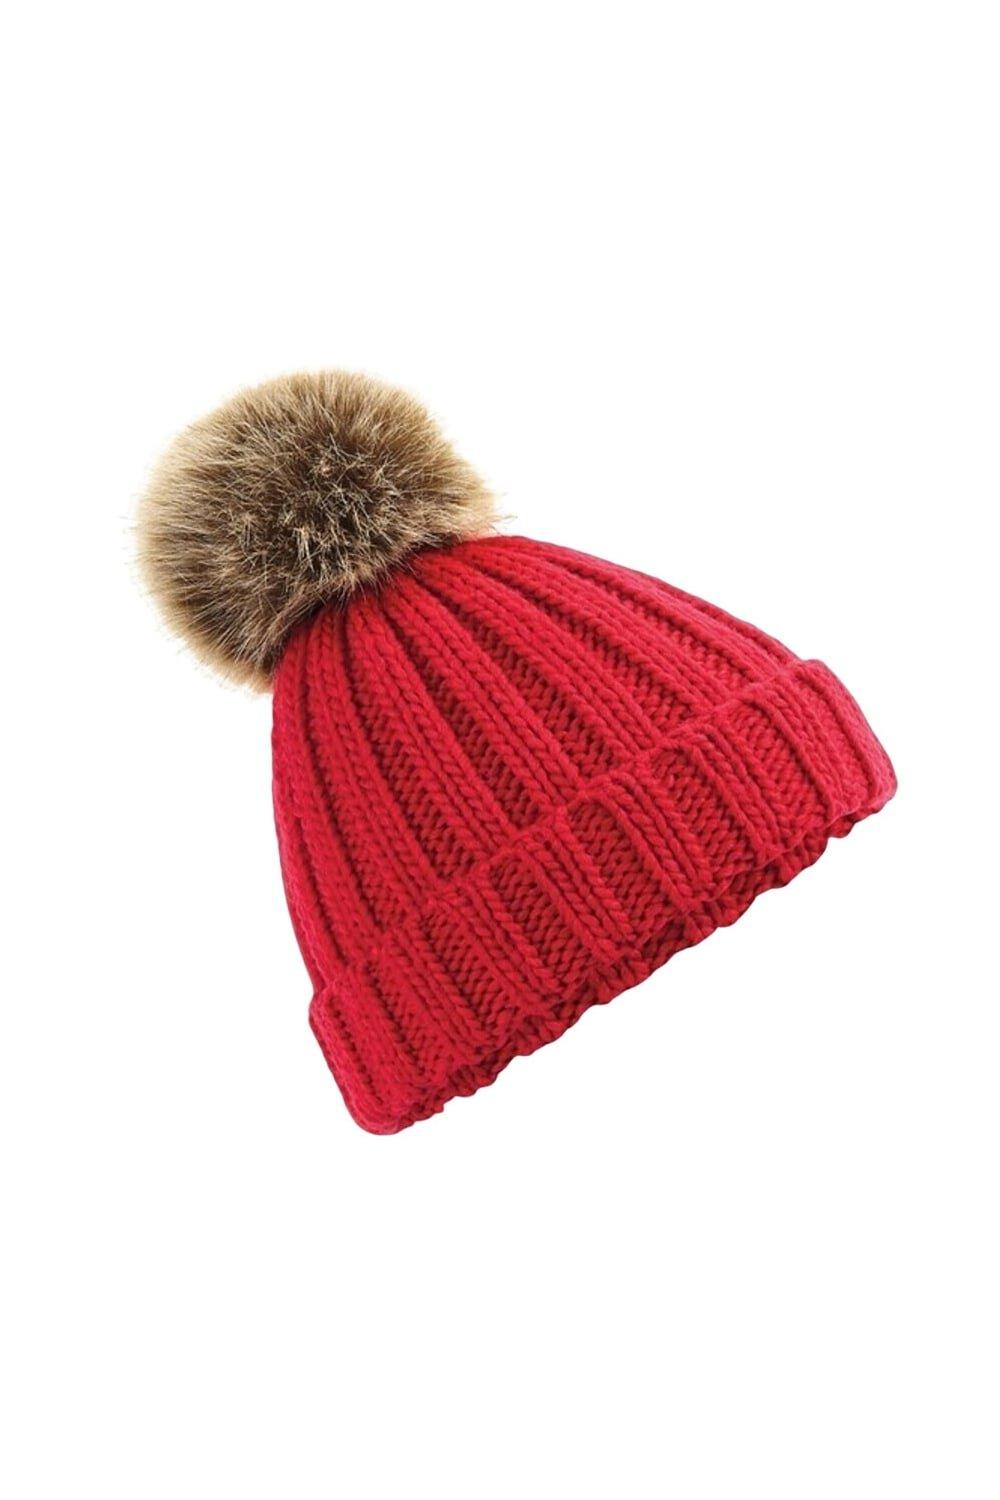 Зимняя шапка с манжетами Beechfield, красный оригинальная зимняя шапка бини с манжетами beechfield красный